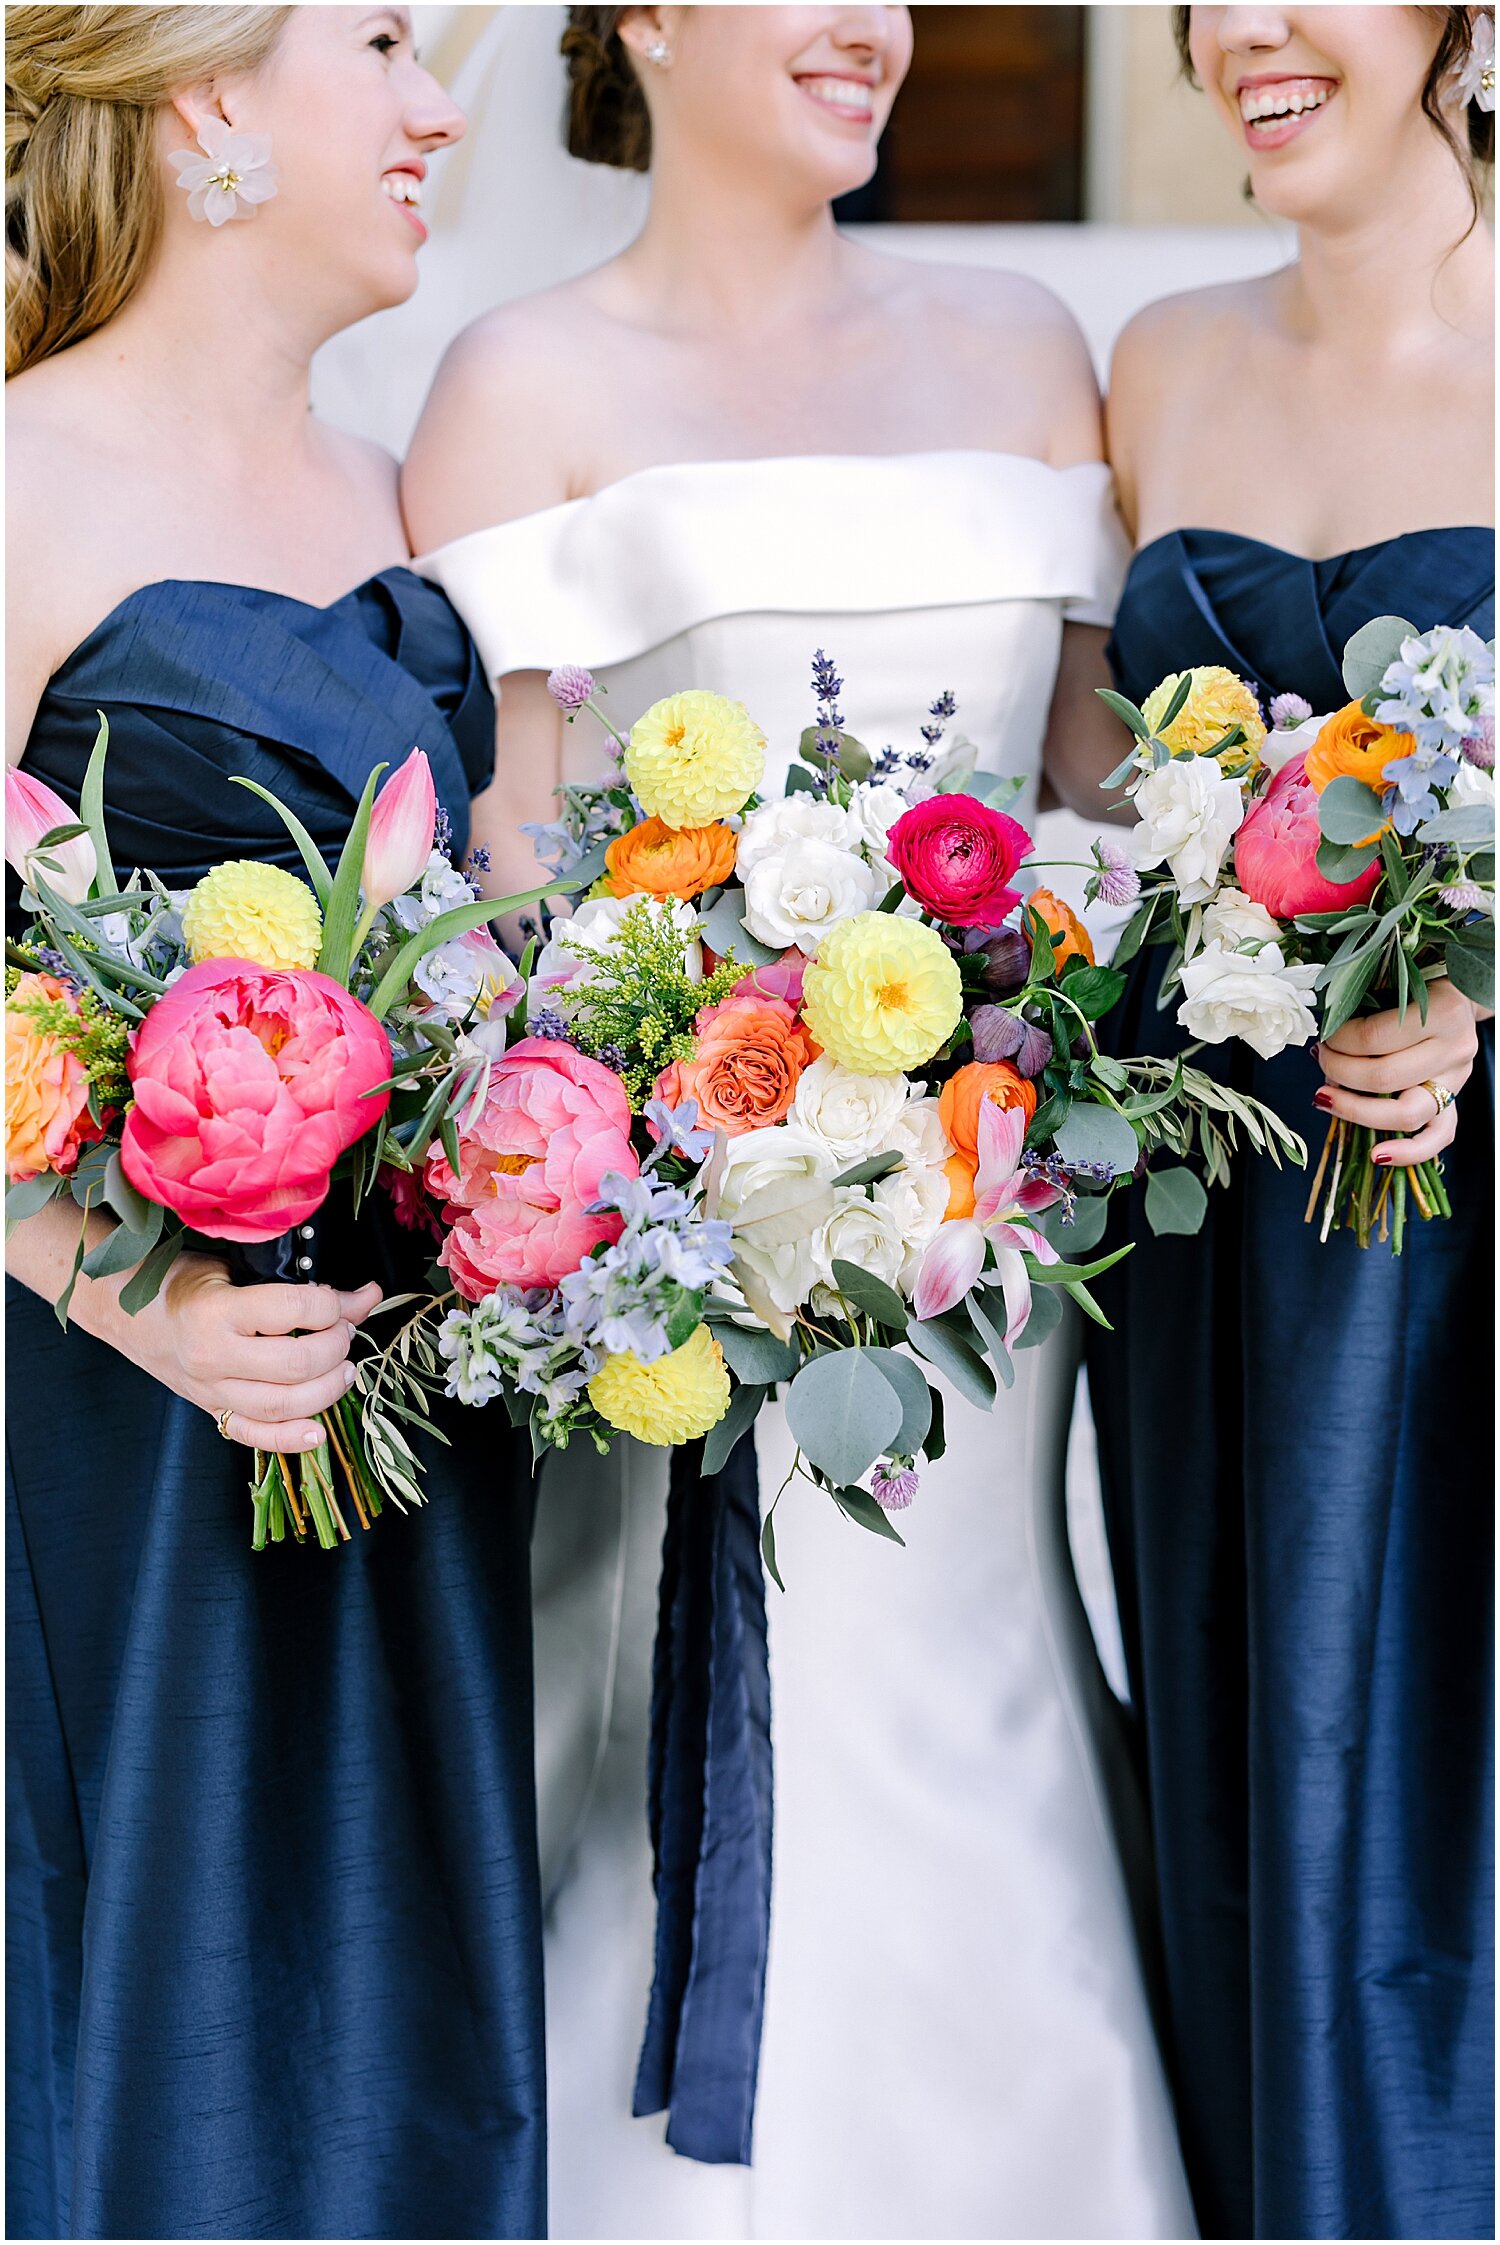  bride and bridesmaids colorful wedding bouquets 